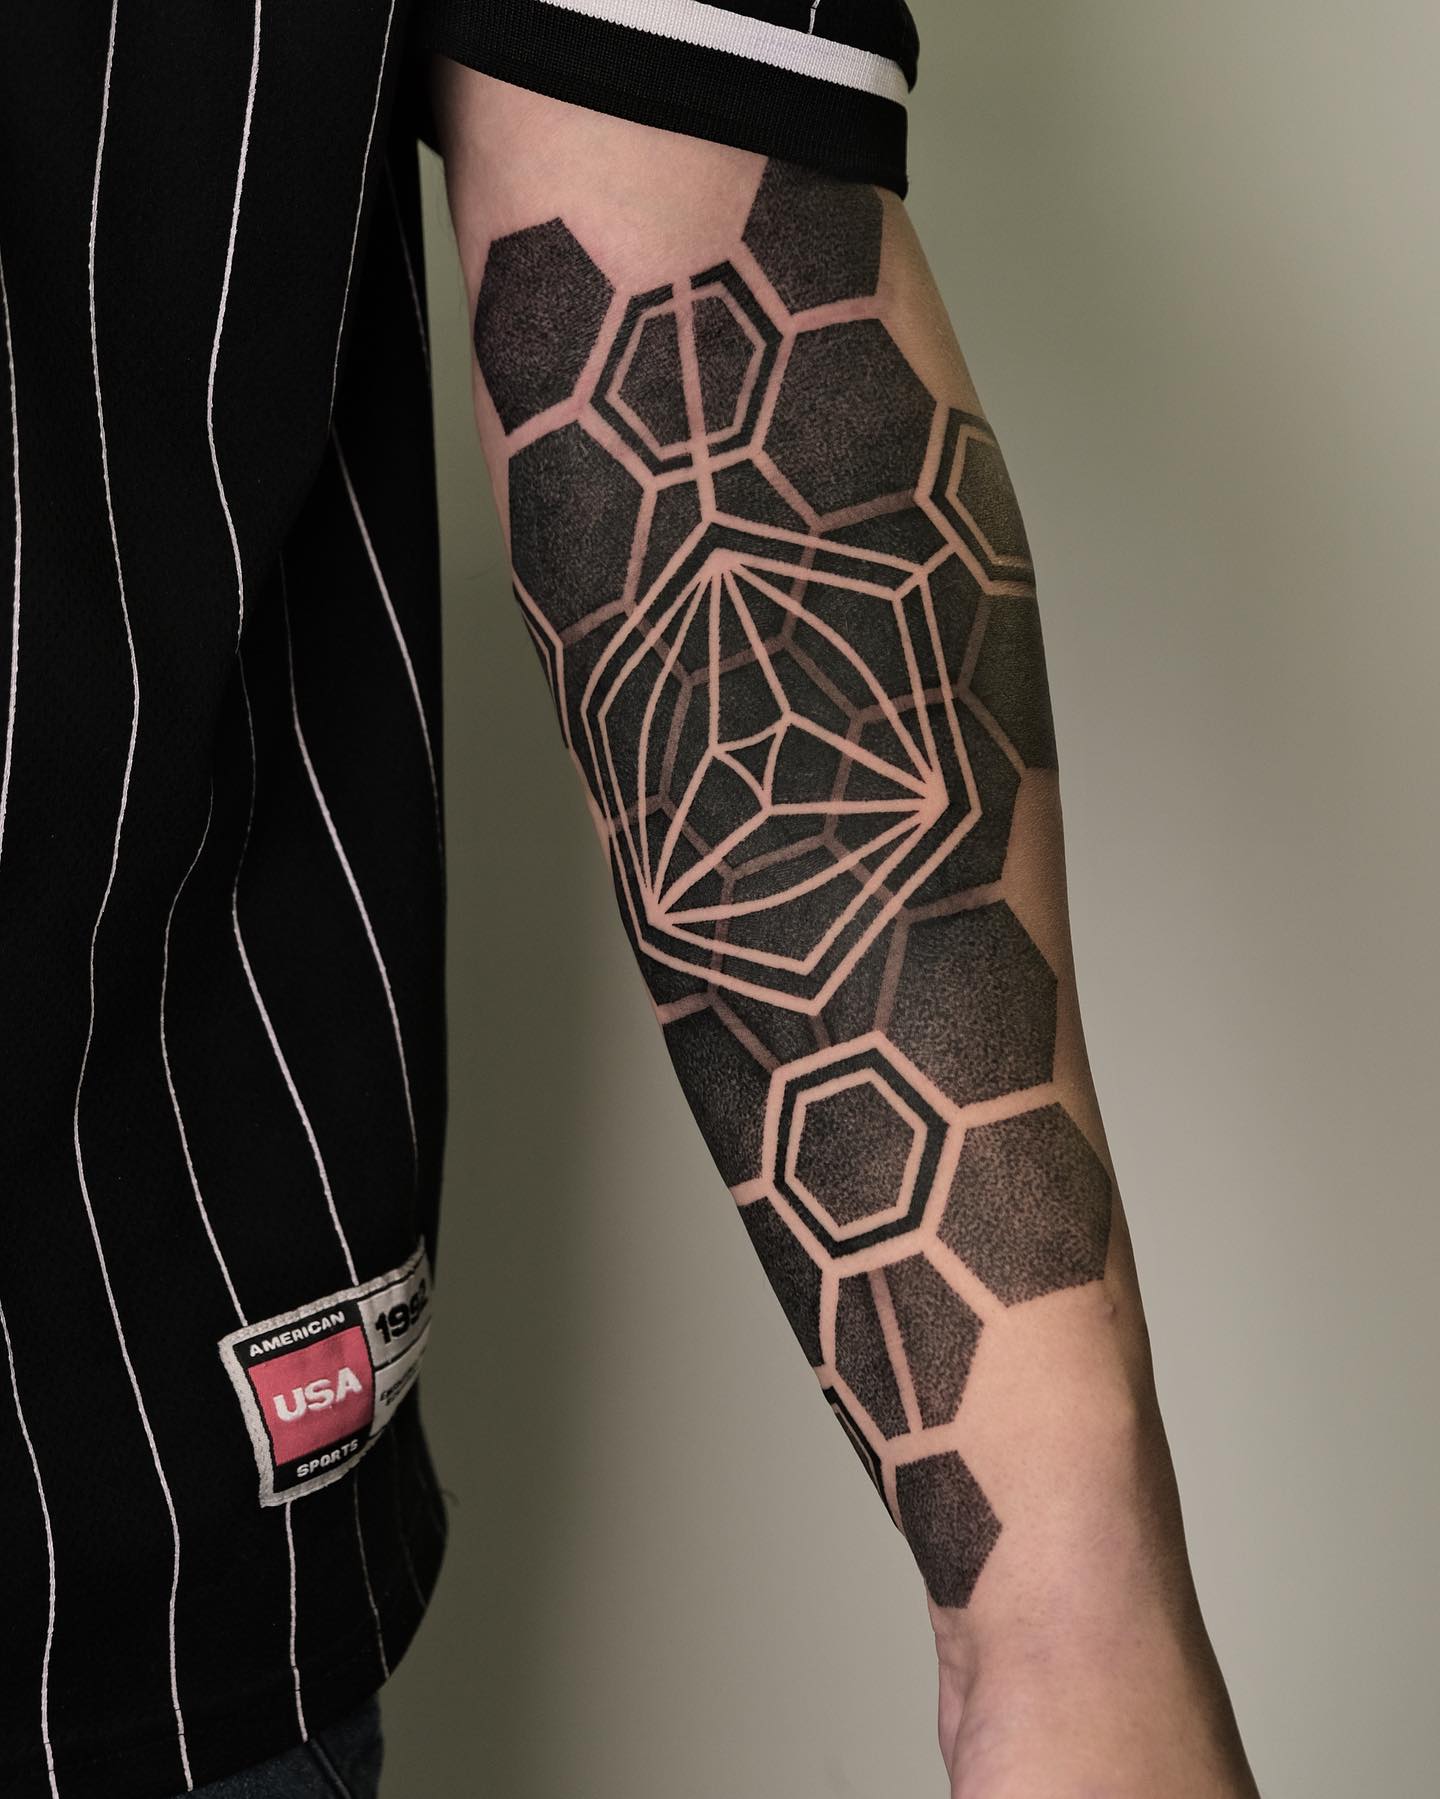 Dotwork geometric tattoo sleeve.